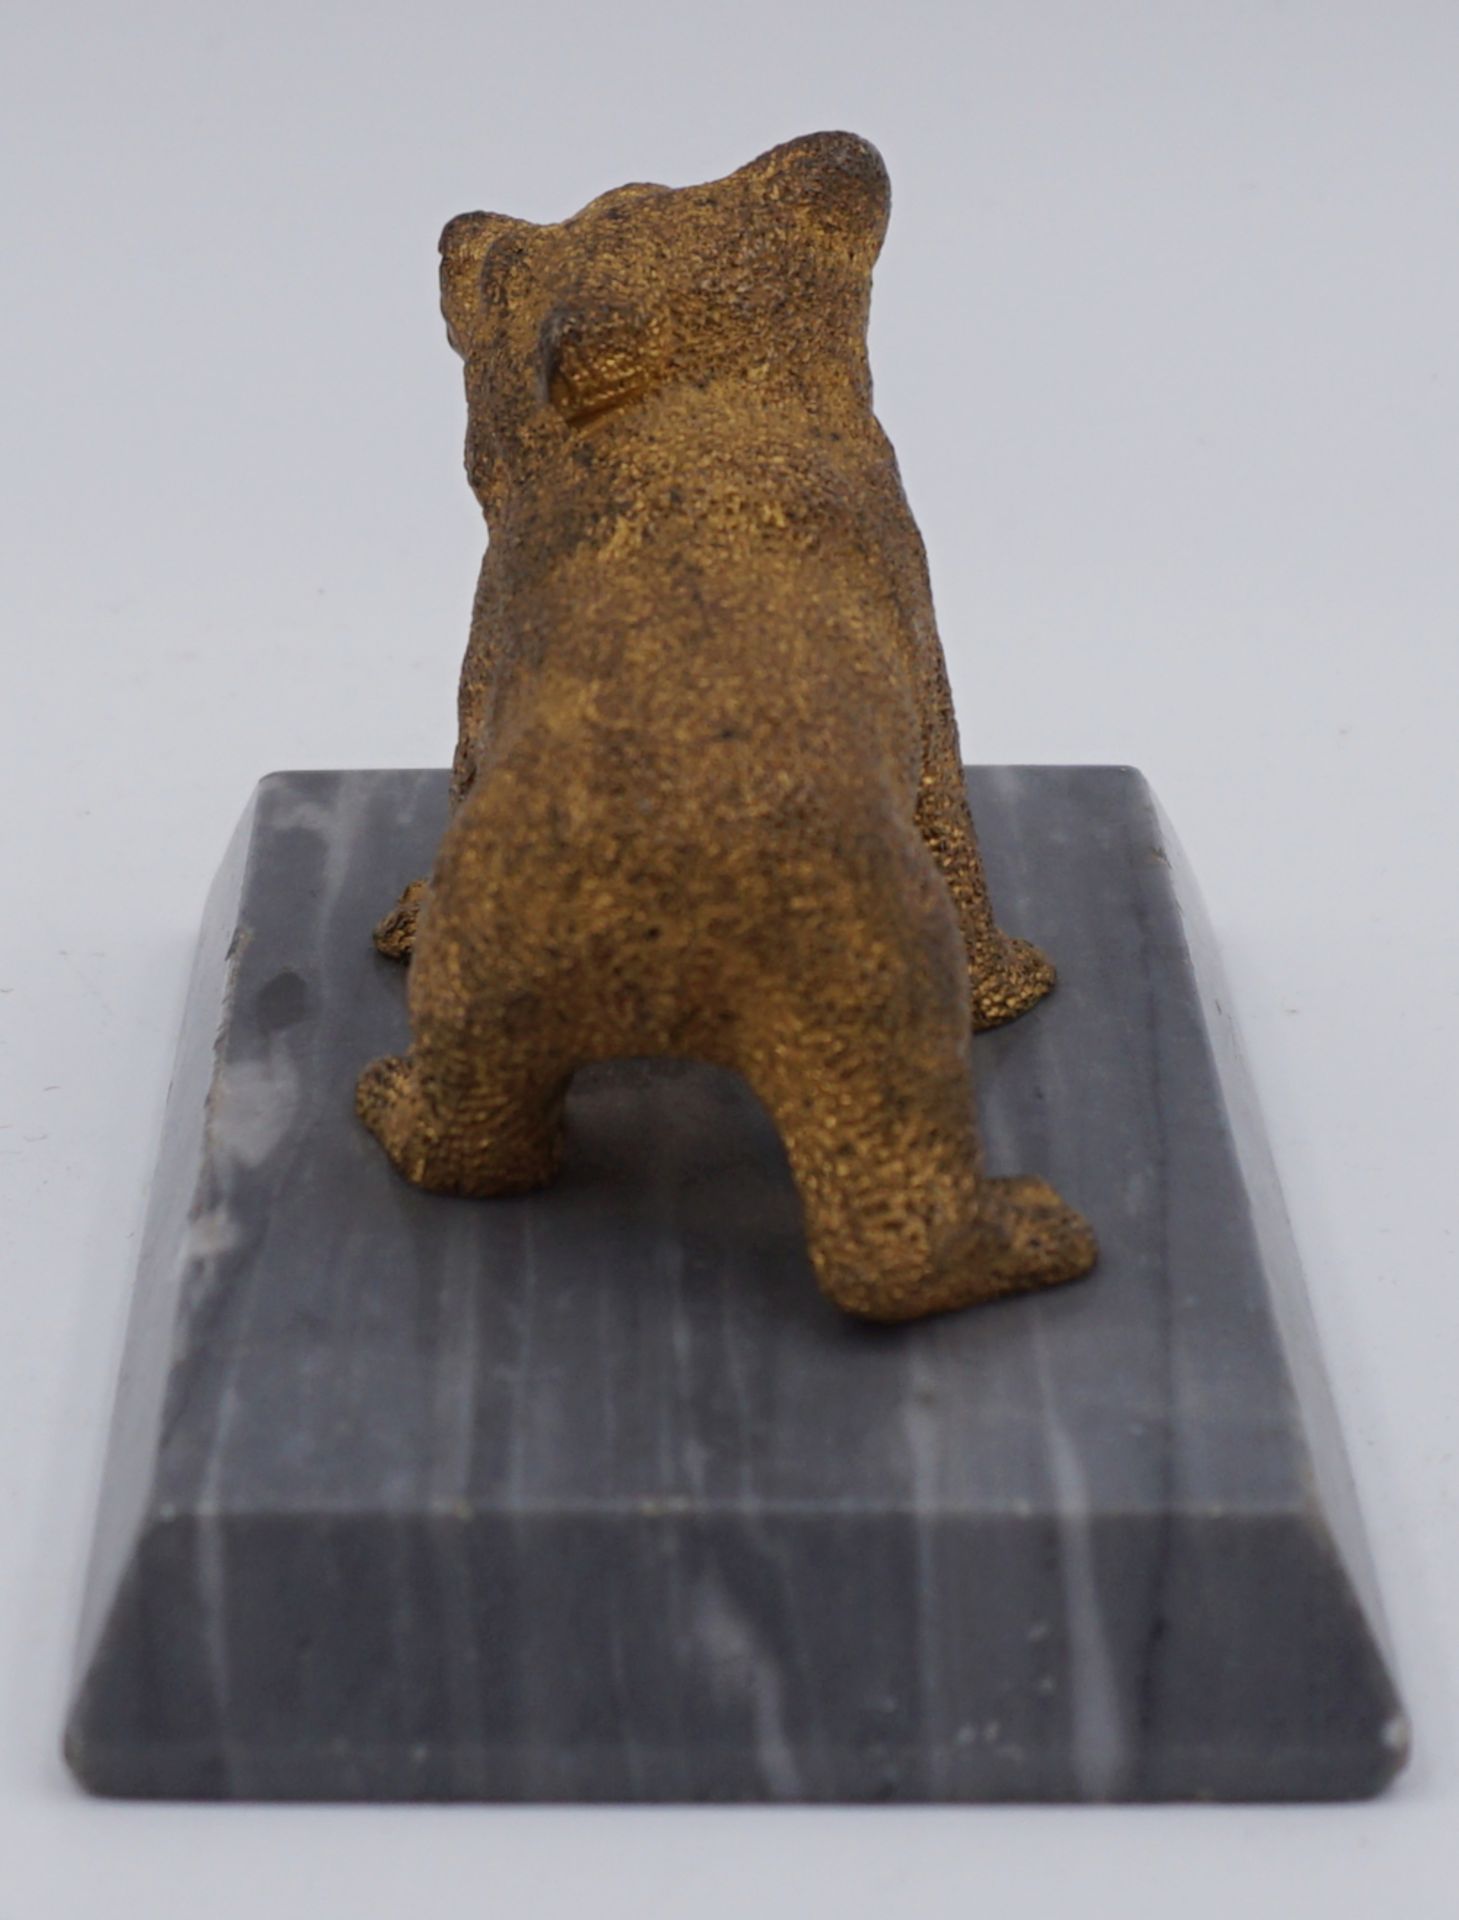 1 Bronzefigur feuervergoldet "Braunbär" lt. EL Russland, auf Steinsockel, H ca. 6cm, min. ber., Asp. - Image 2 of 4